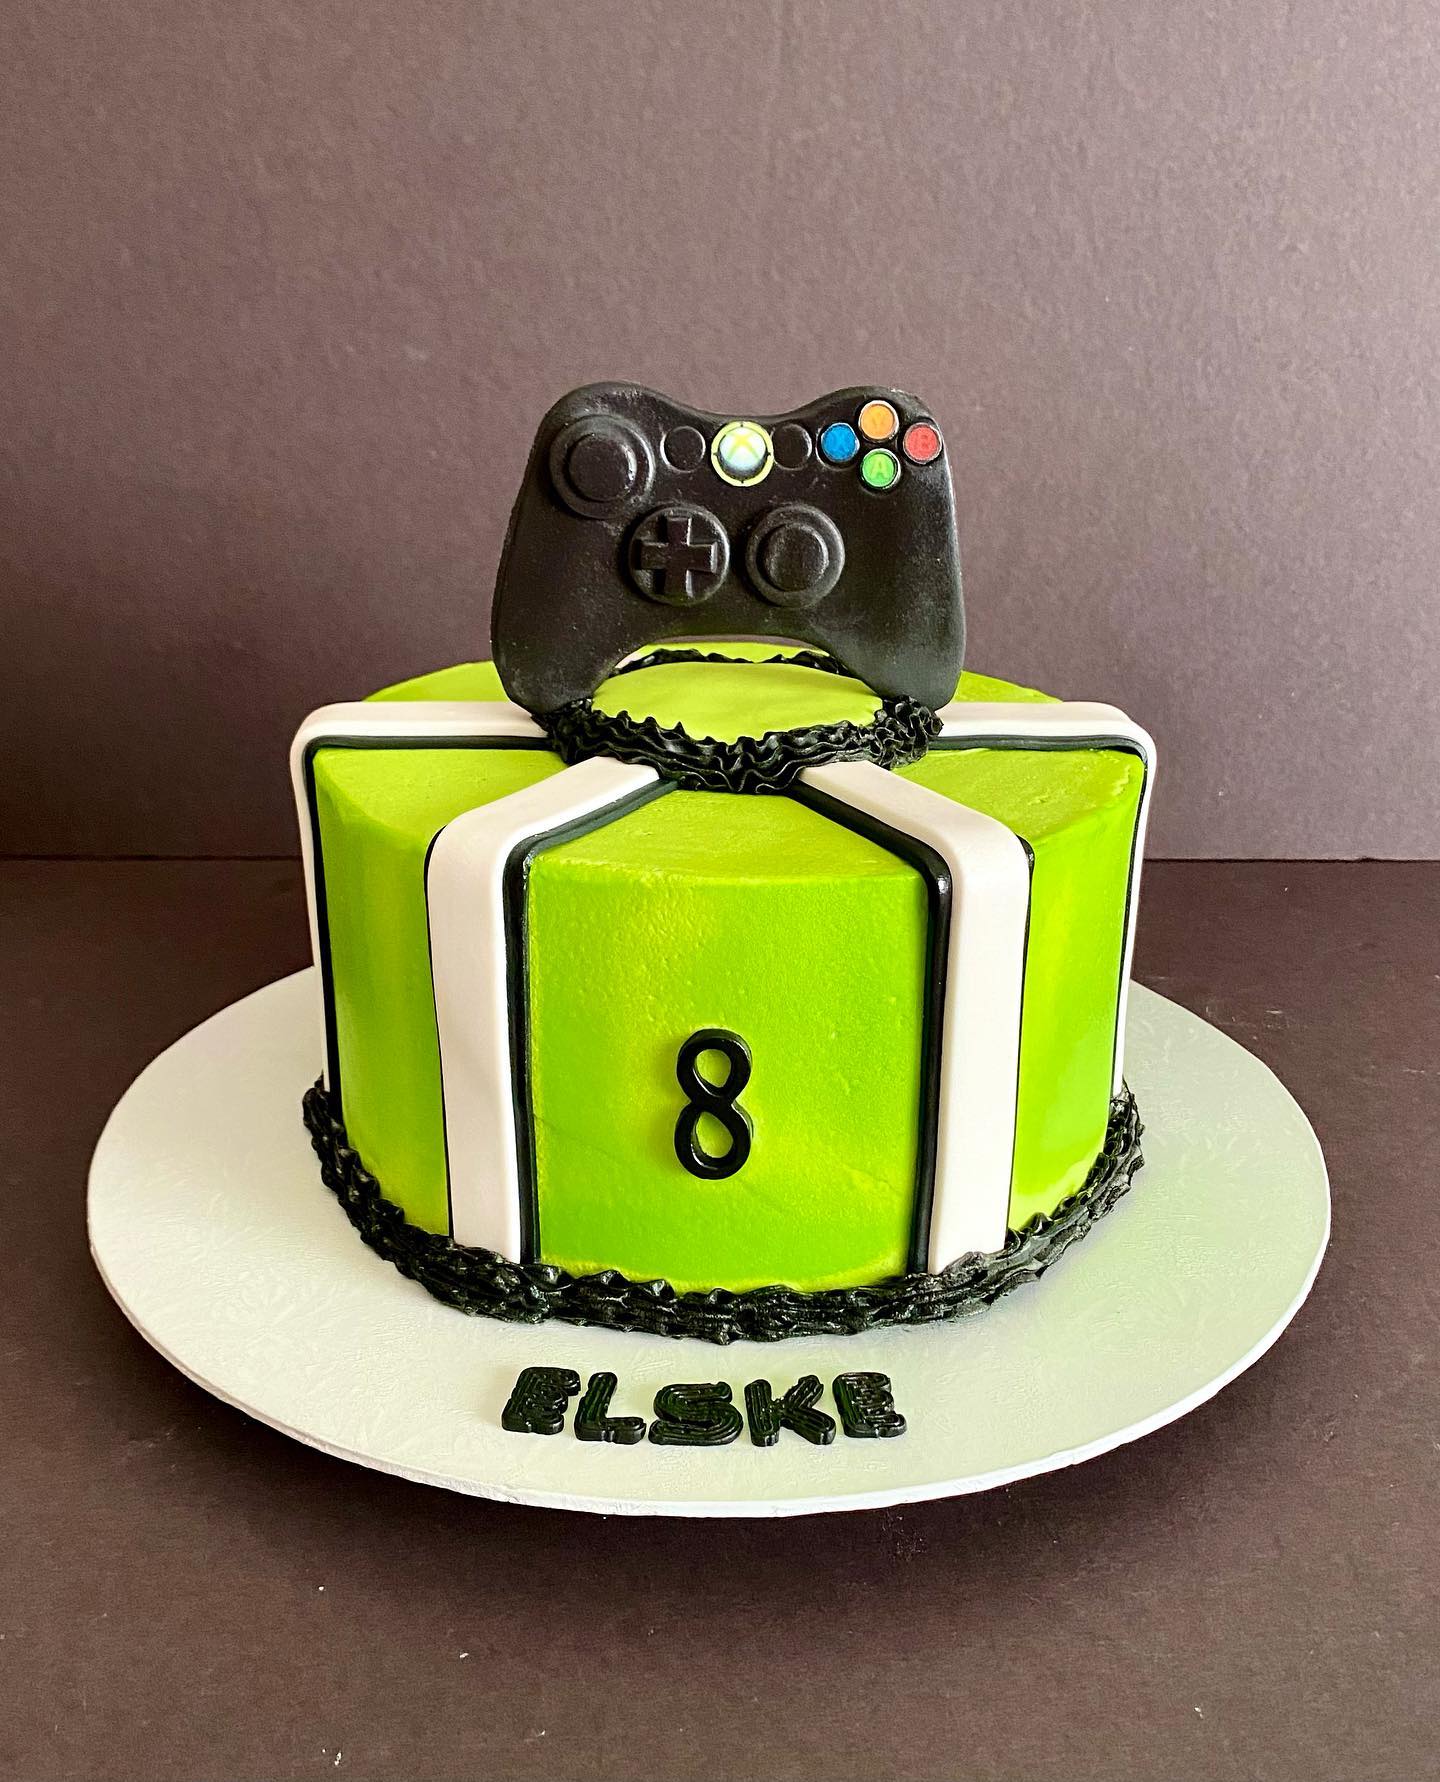 My Bakery Empire: Bake a Cake - Apps on Google Play